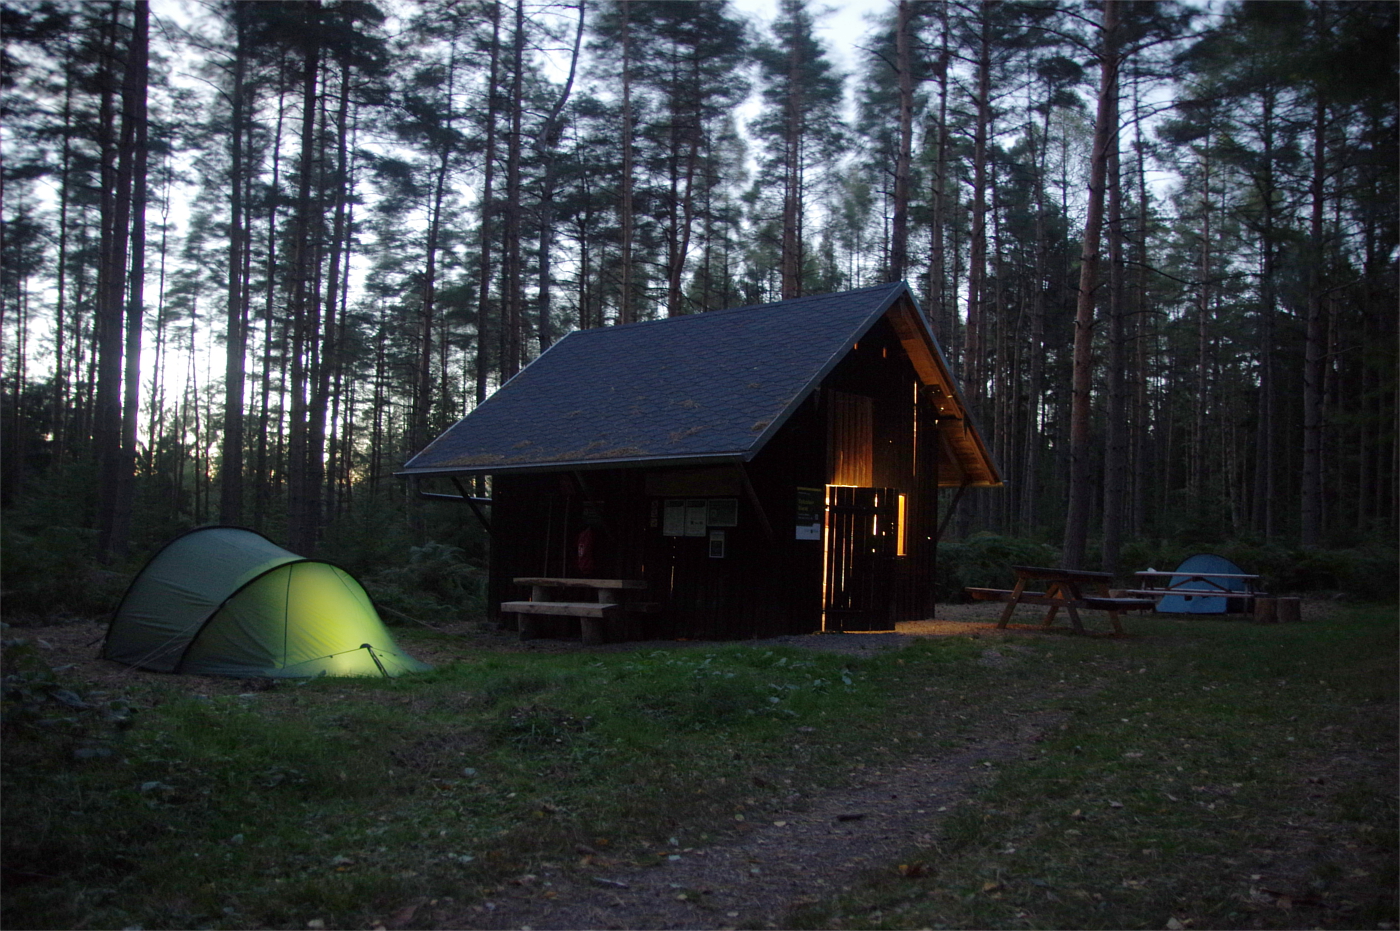 Hütte und Zelte in Wald (c) HLandgraf